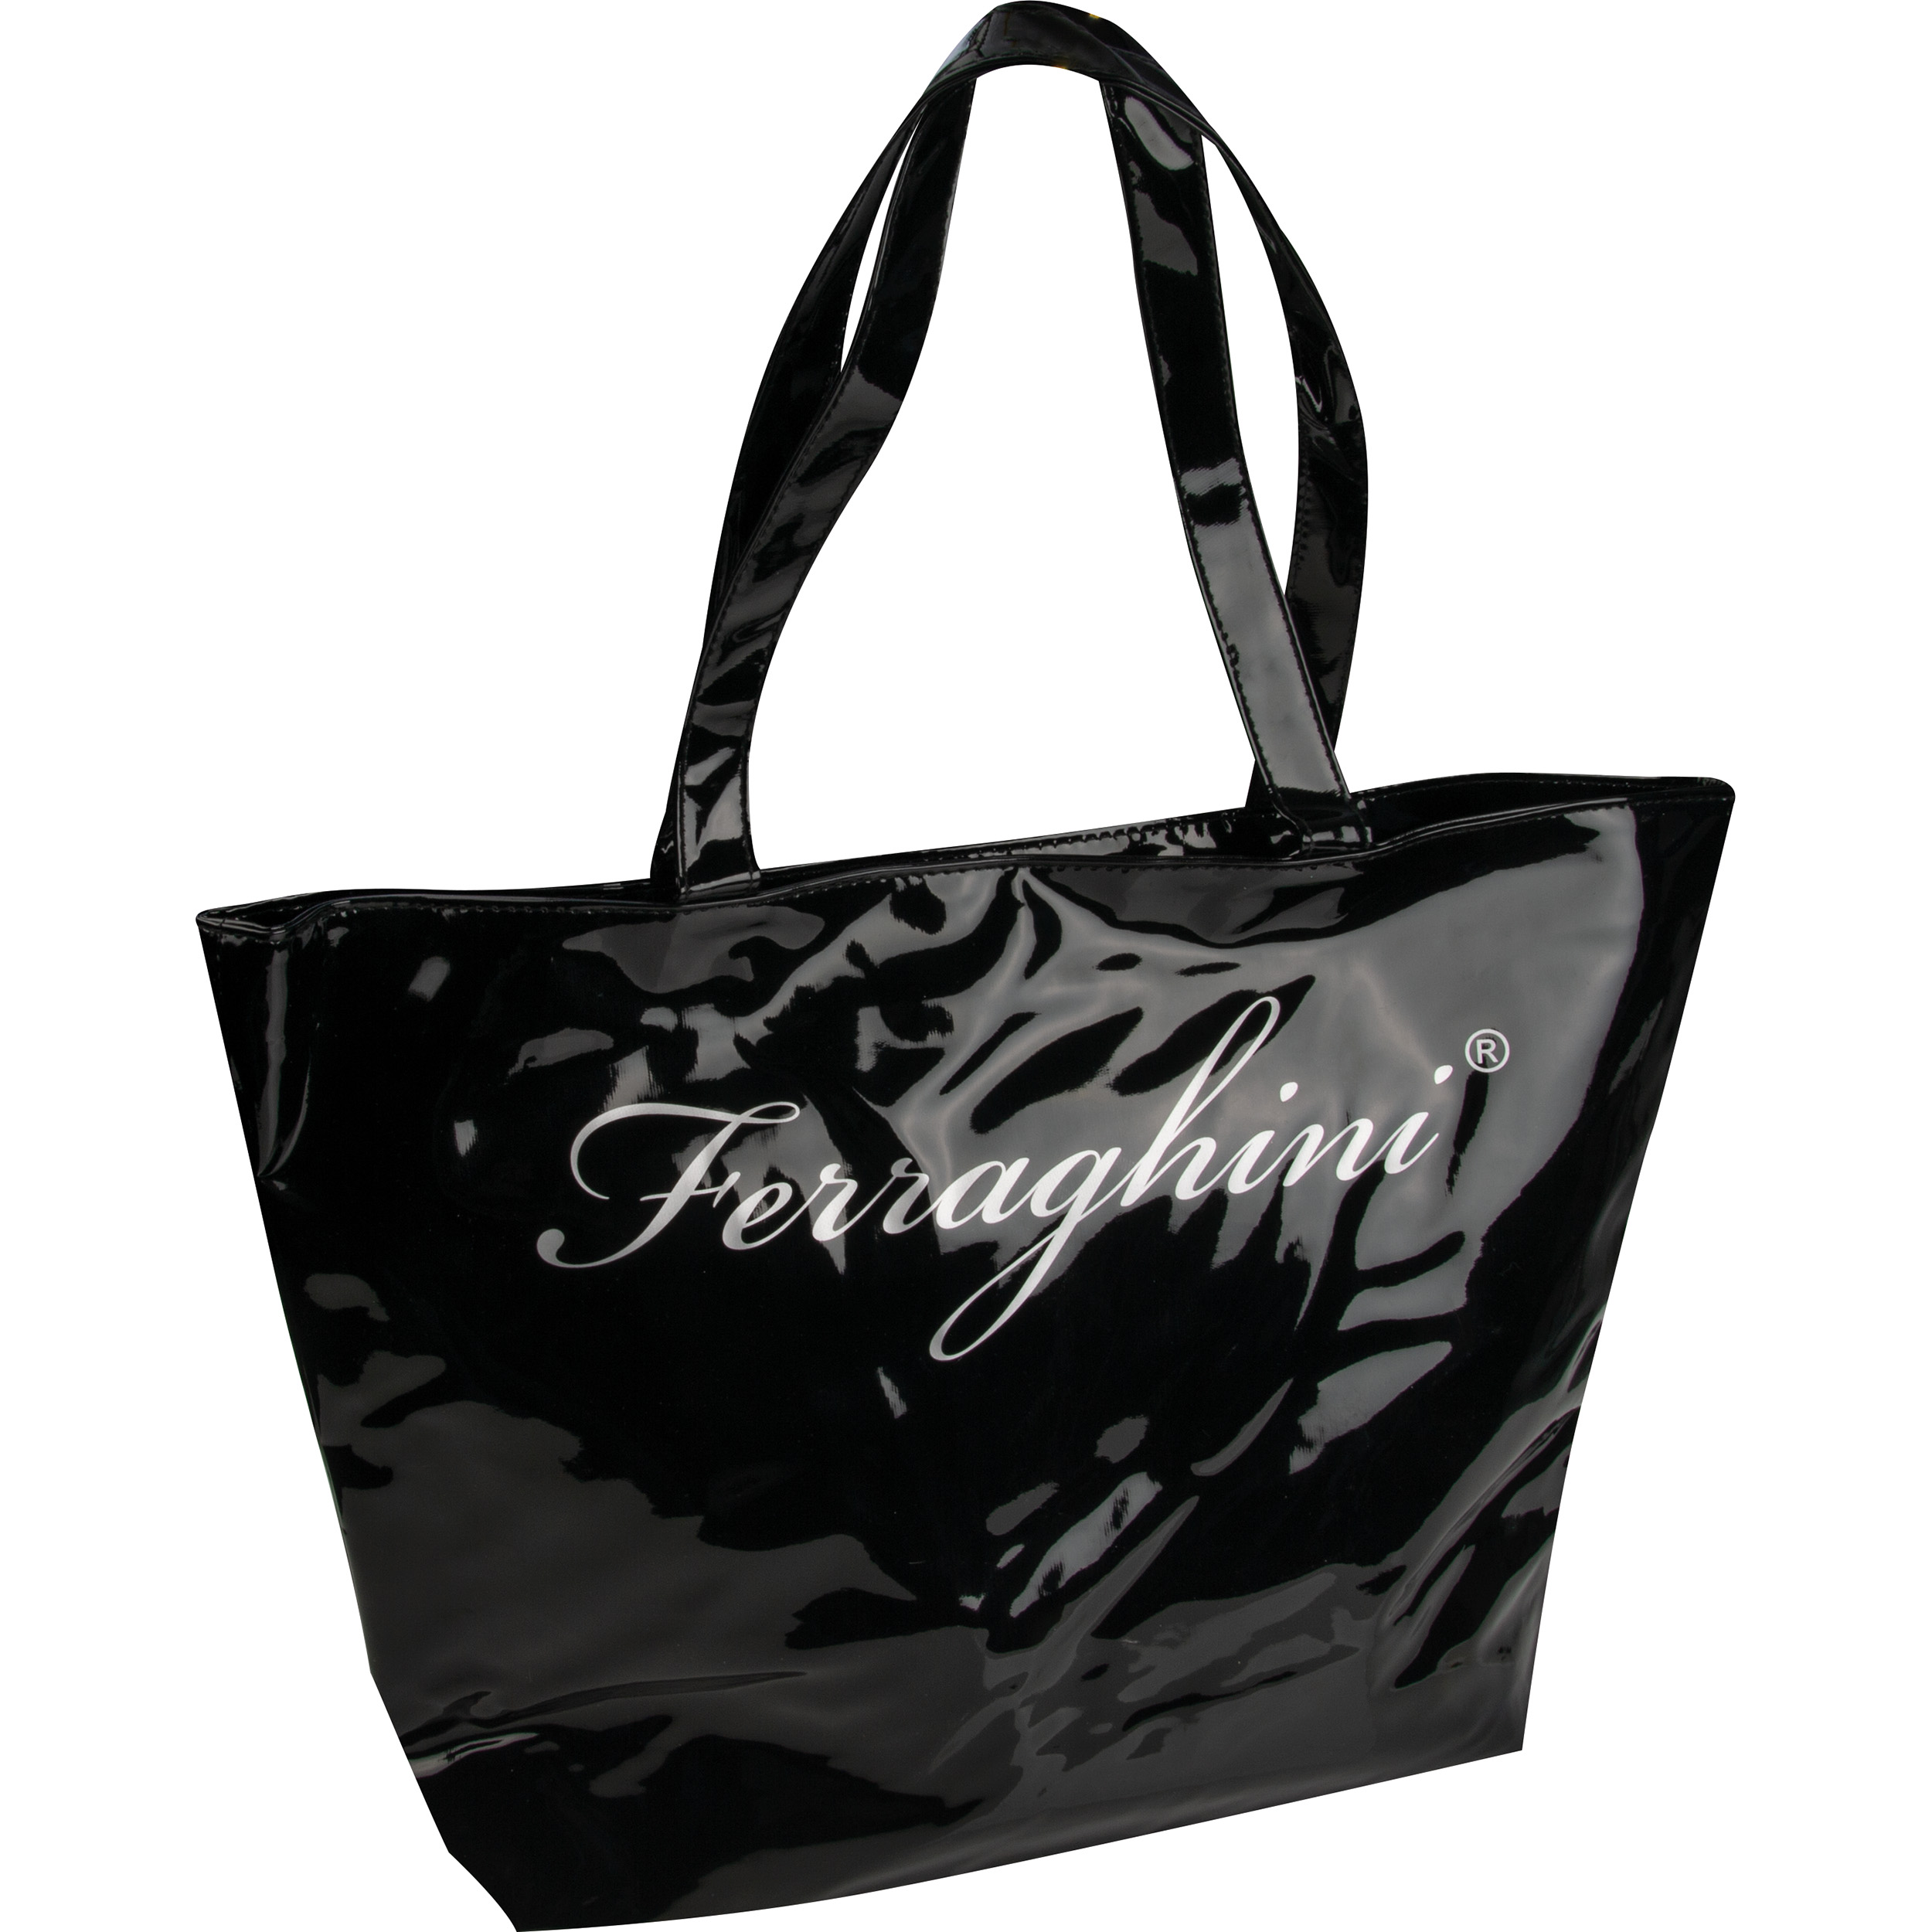 Ferraghini exhibition bag